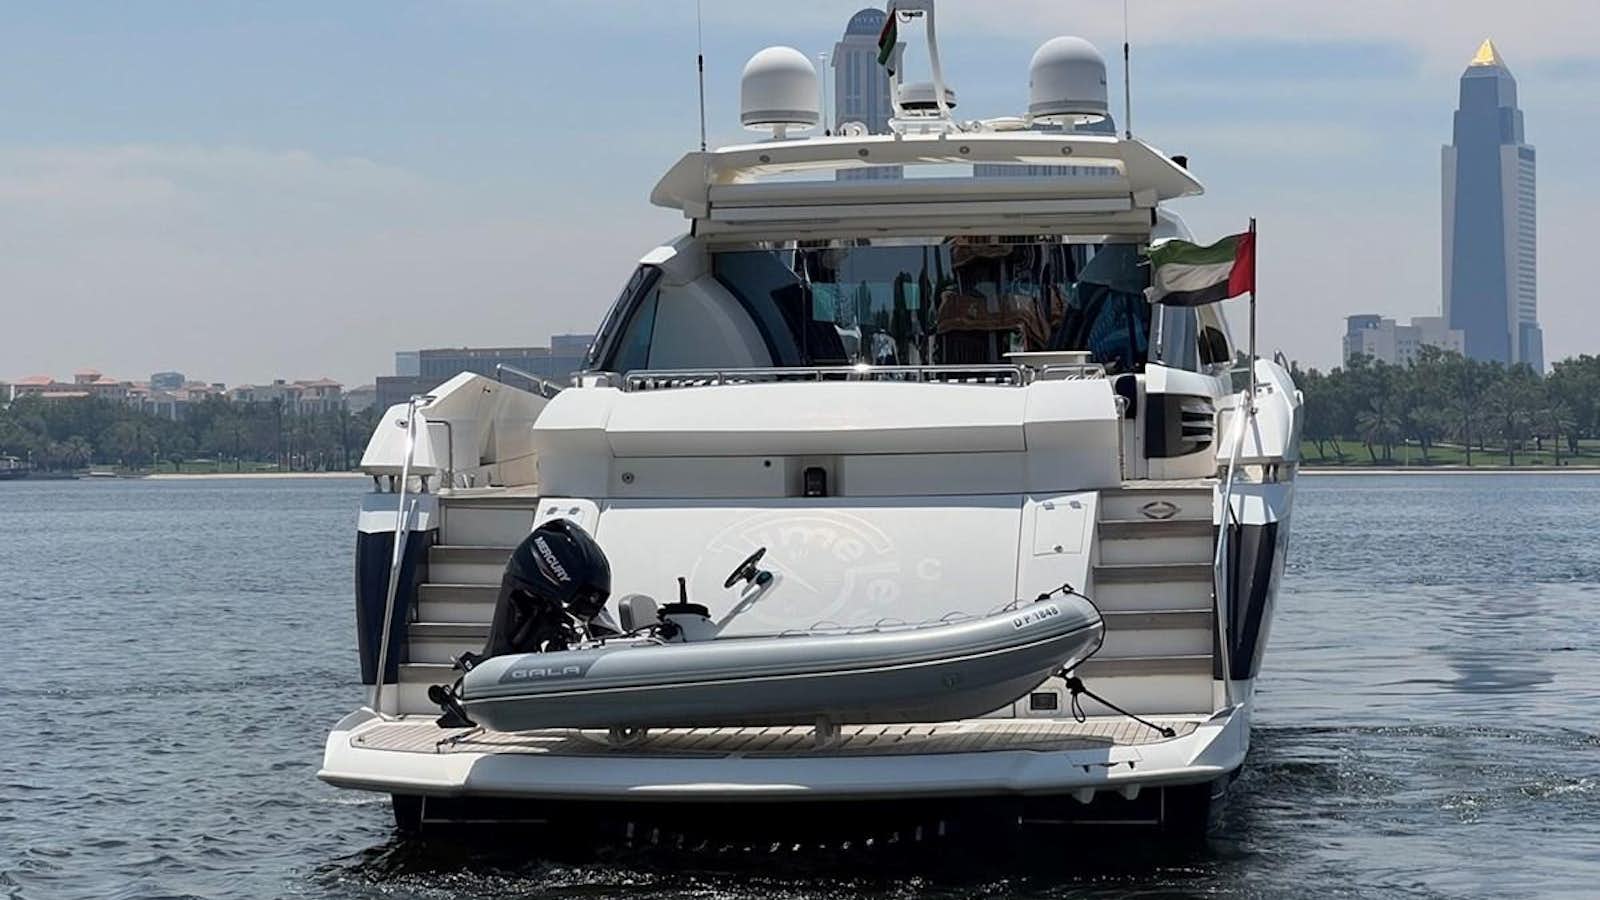 Sunseeker 95 predator
Yacht for Sale